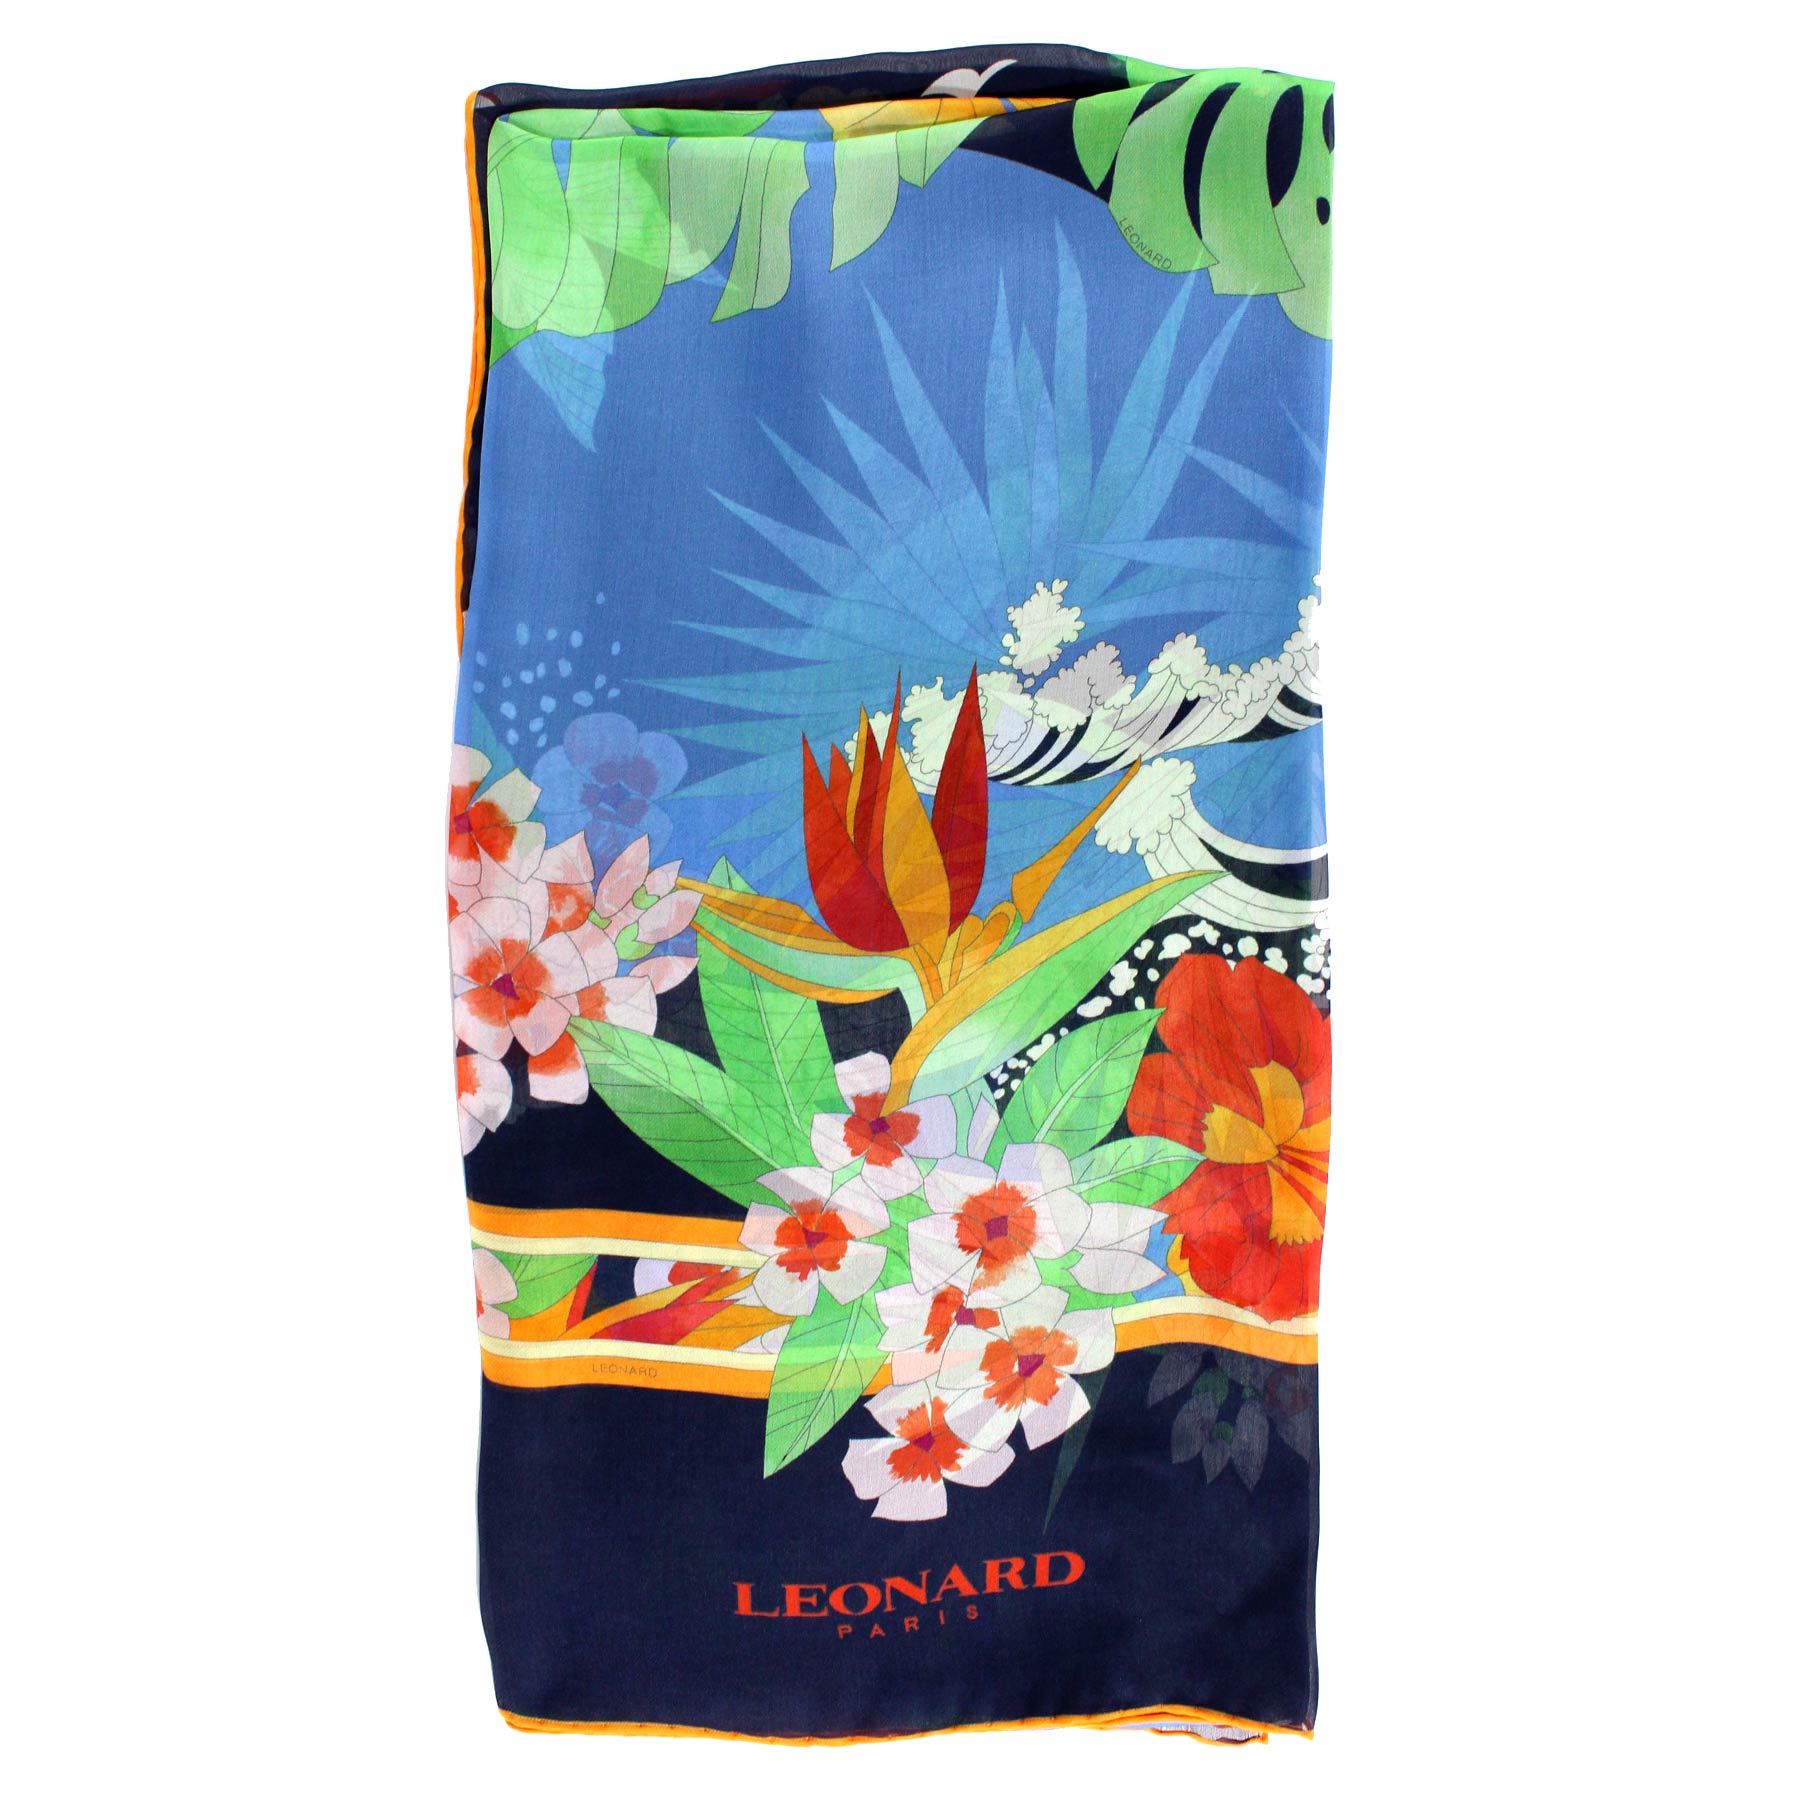 Leonard Paris Scarf Floral Floride Design - Chiffon Silk Shawl SALE